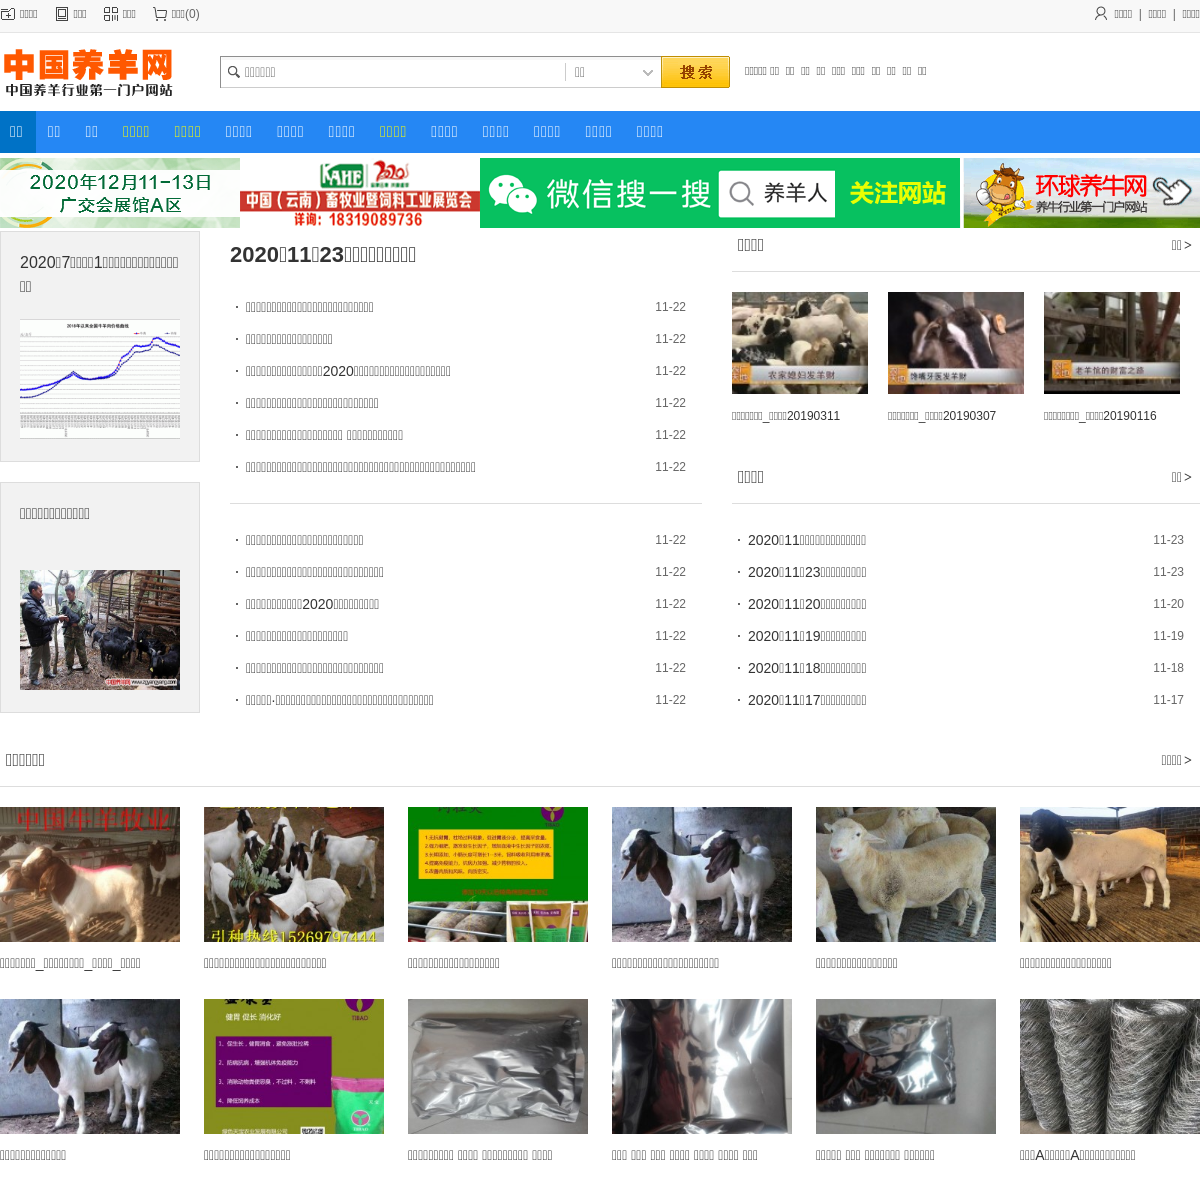 A complete backup of zgyangyang.com